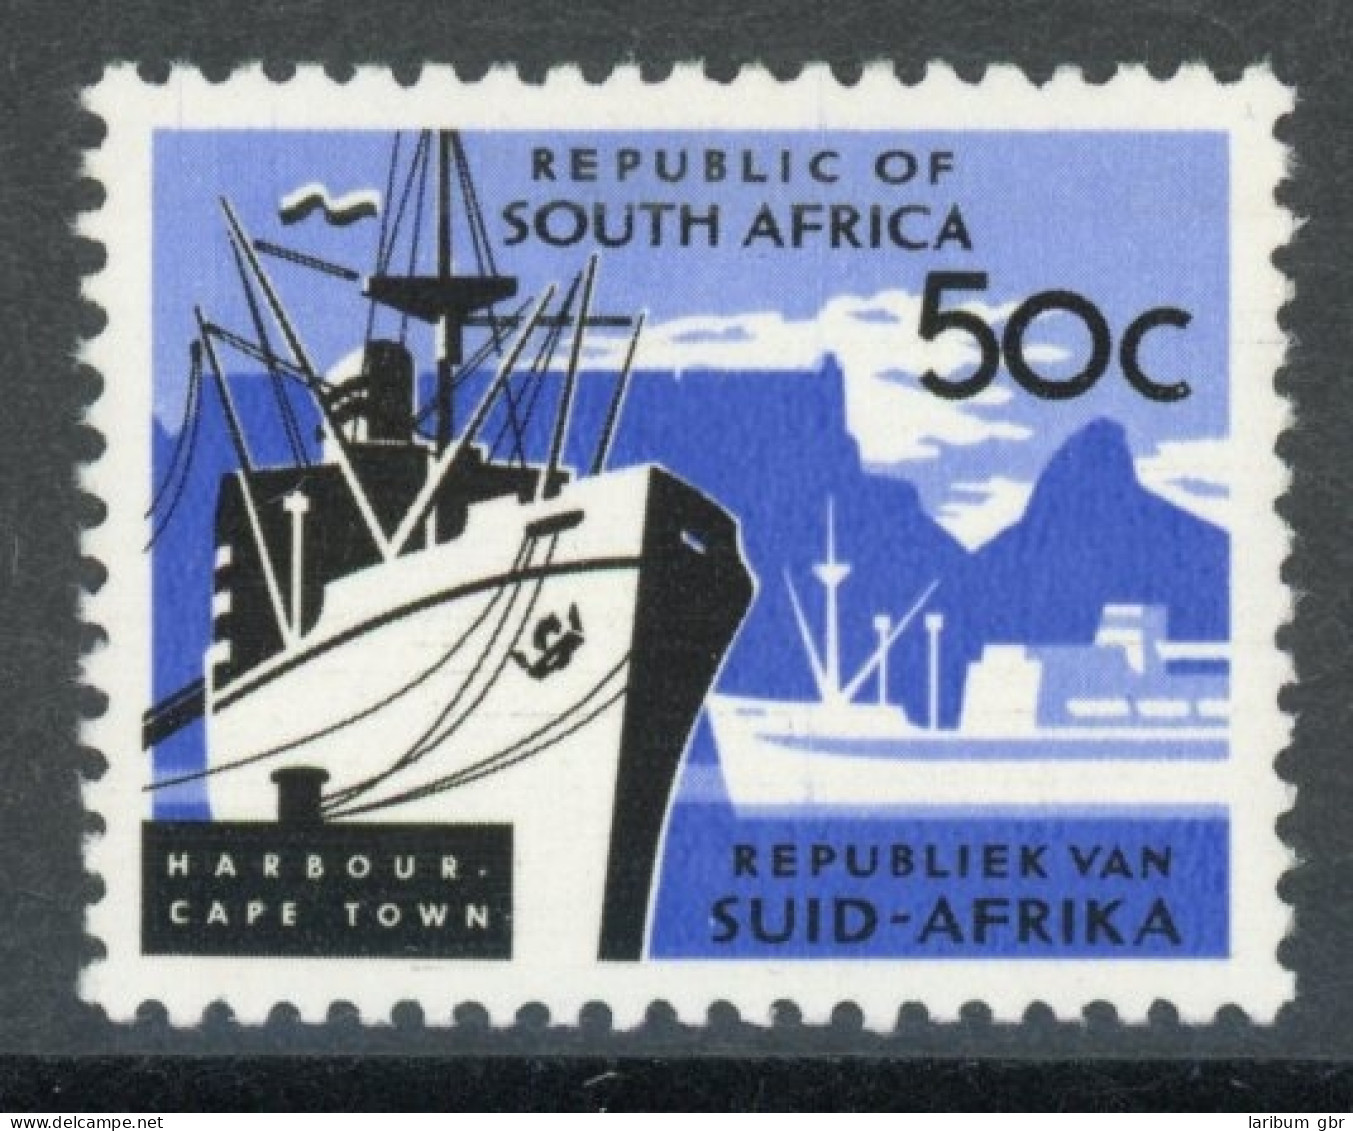 Südafrika 298 Postfrisch Schiffe #JM468 - Bofutatsuana